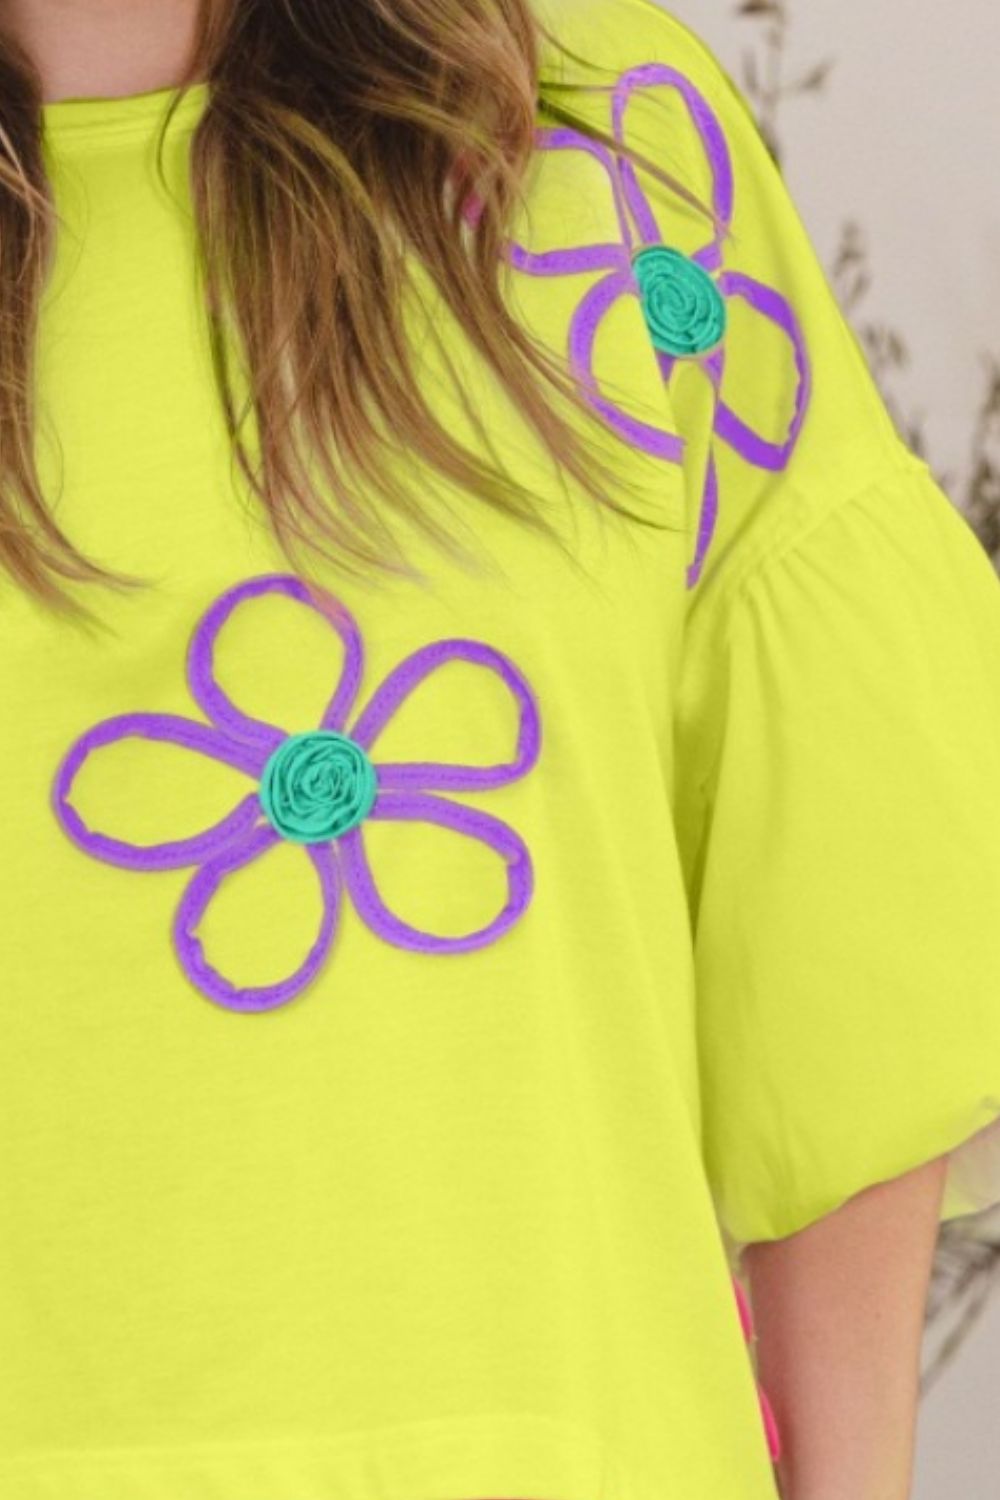 Flower Appliqué Detail T-Shirt in LimelightT-ShirtODDI